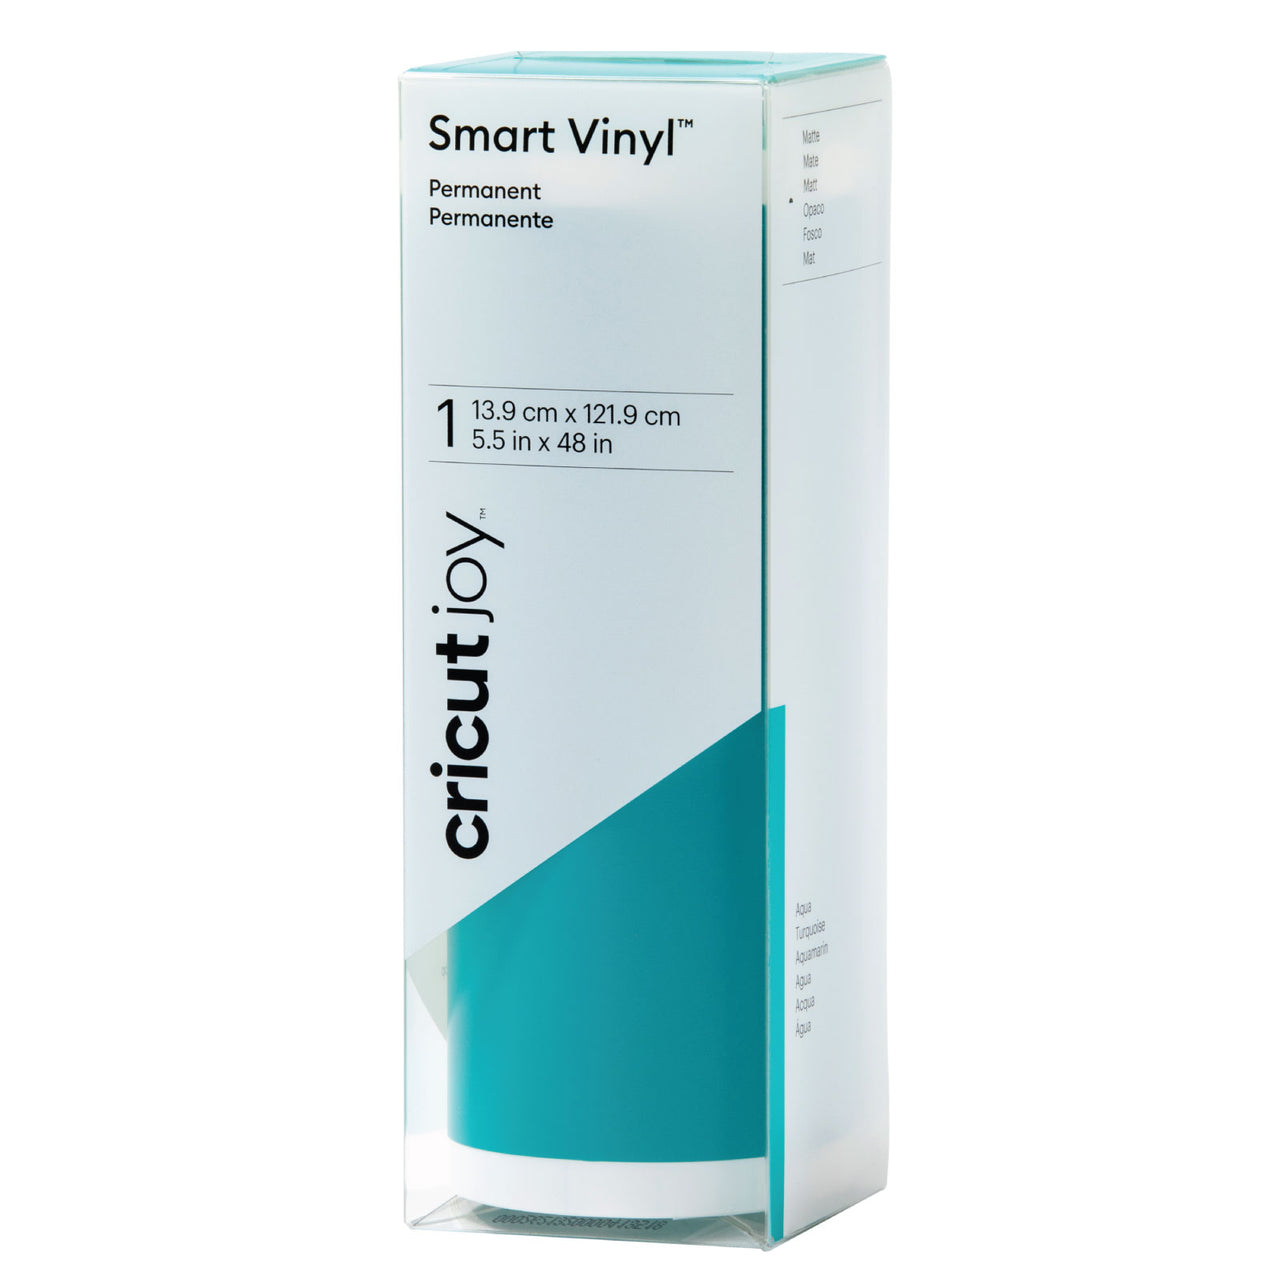 Cricut Joy Smart Vinyl - Permanent Aqua - Damaged Package